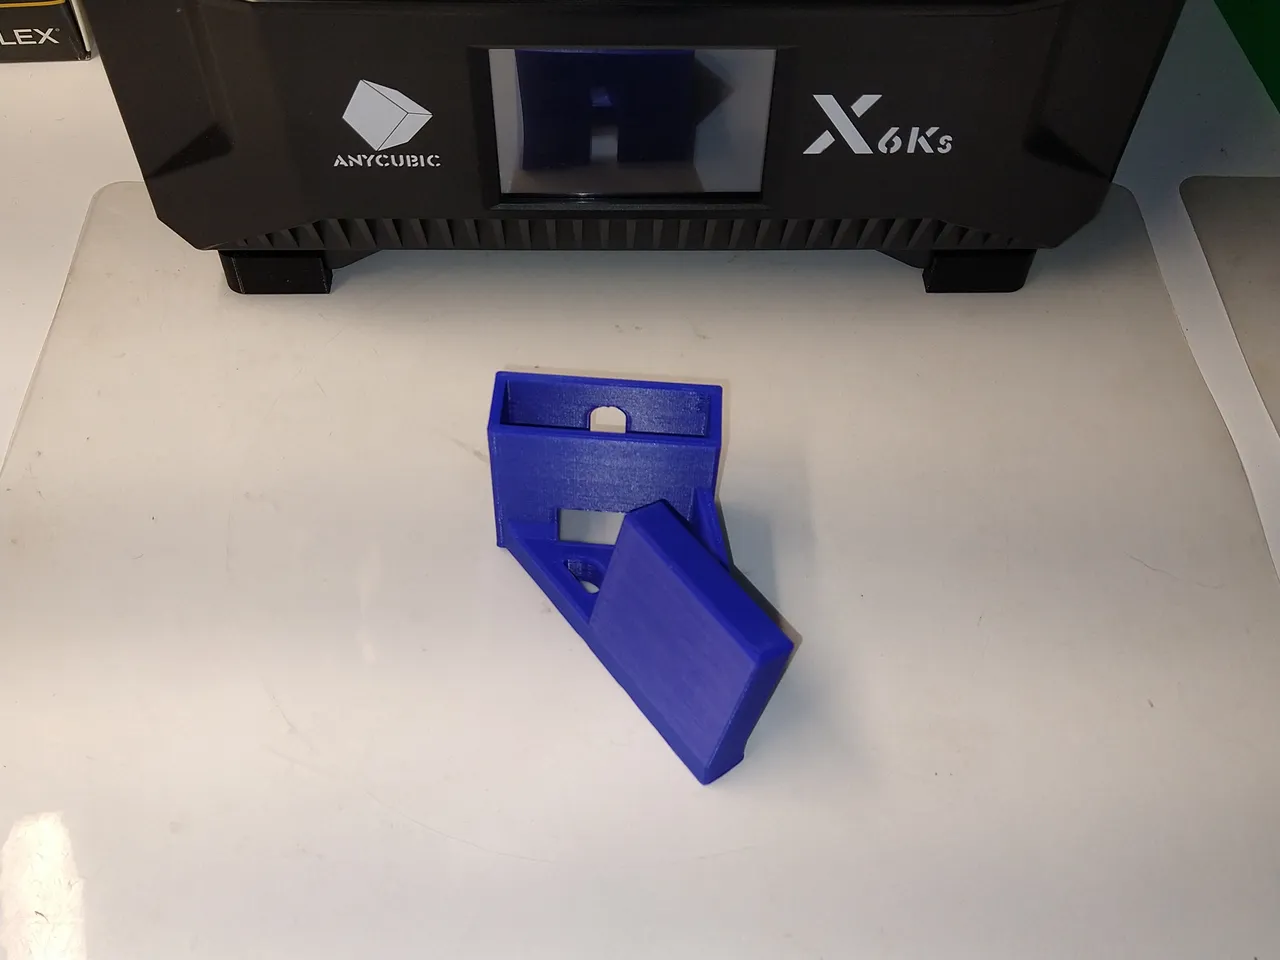 Anycubic Photon Mono X 6Ks – The 3D Printer Store